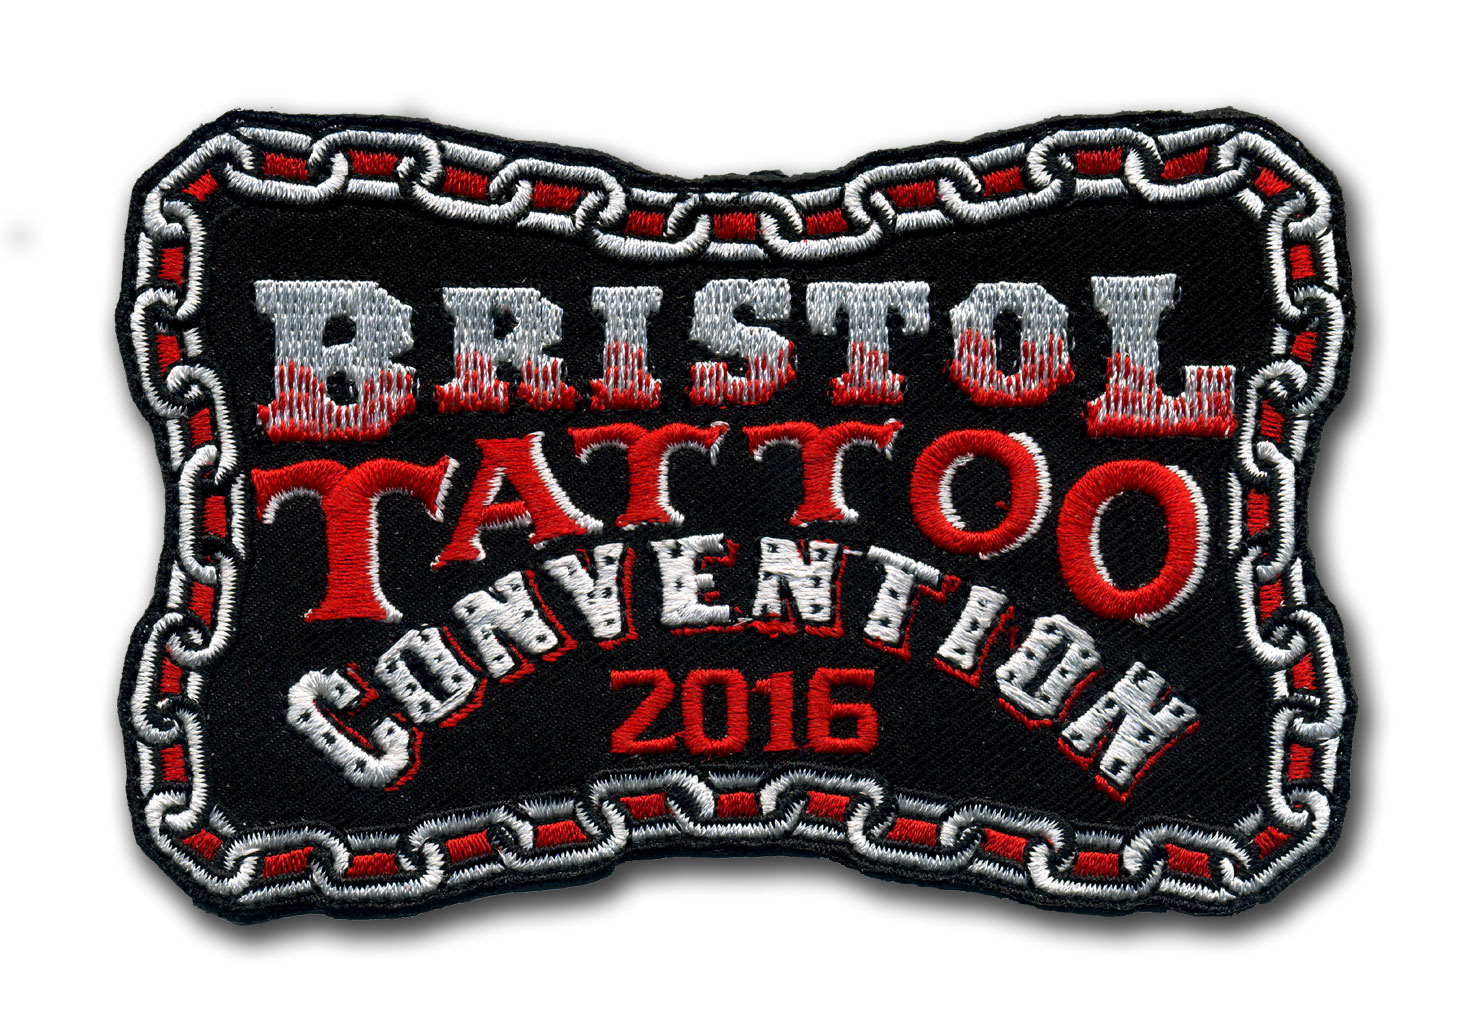 Bristol tattoo convention liveTikTok Search